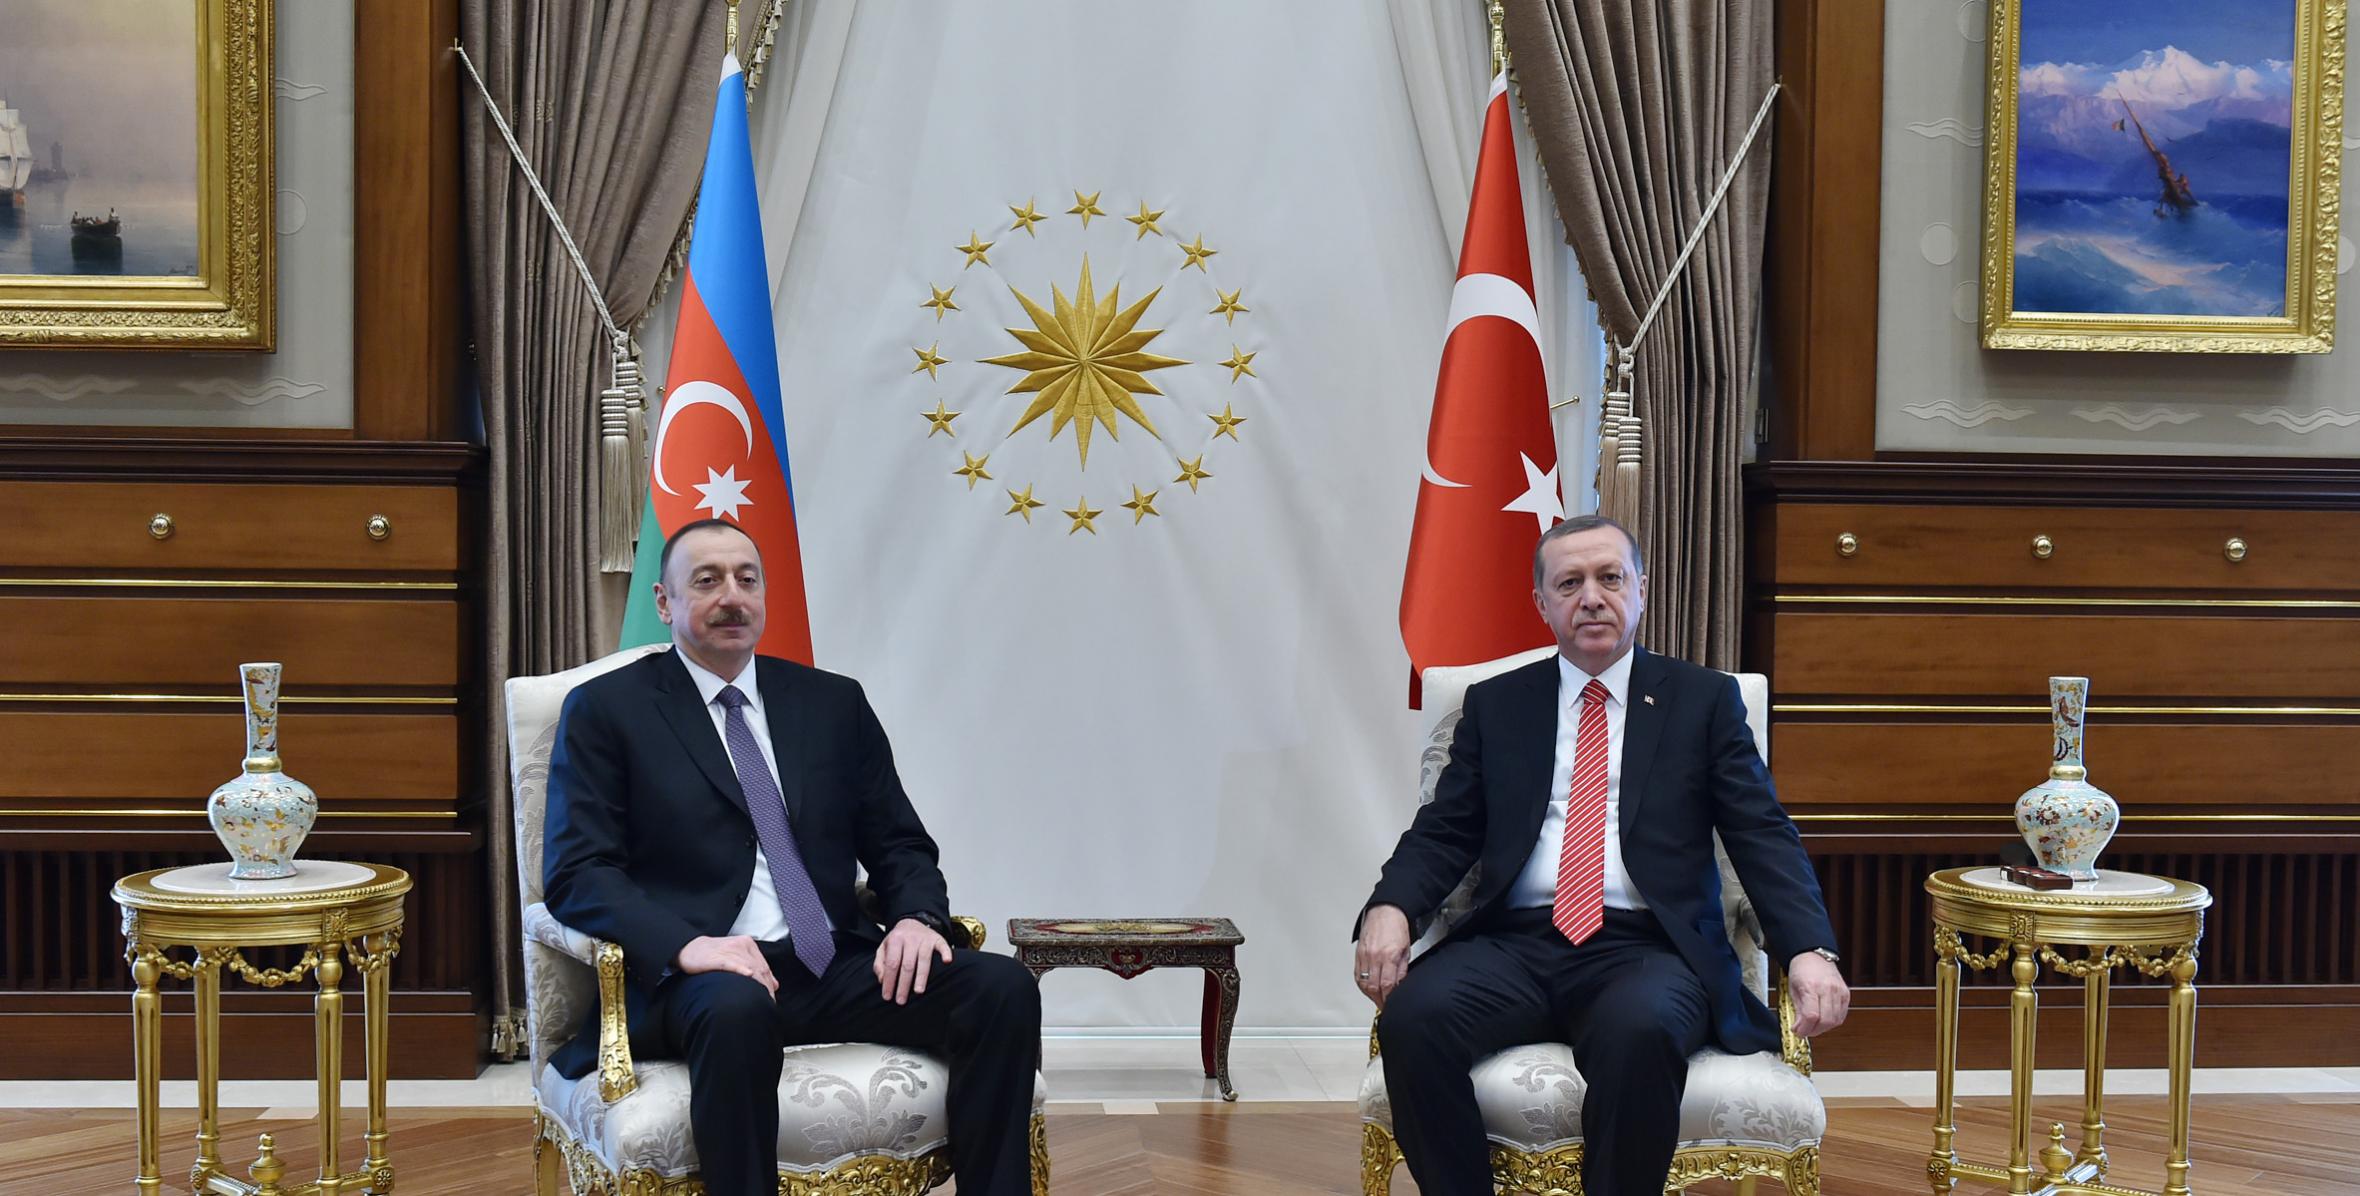 Ilham Aliyev and Turkish President Recep Tayyip Erdogan met in private